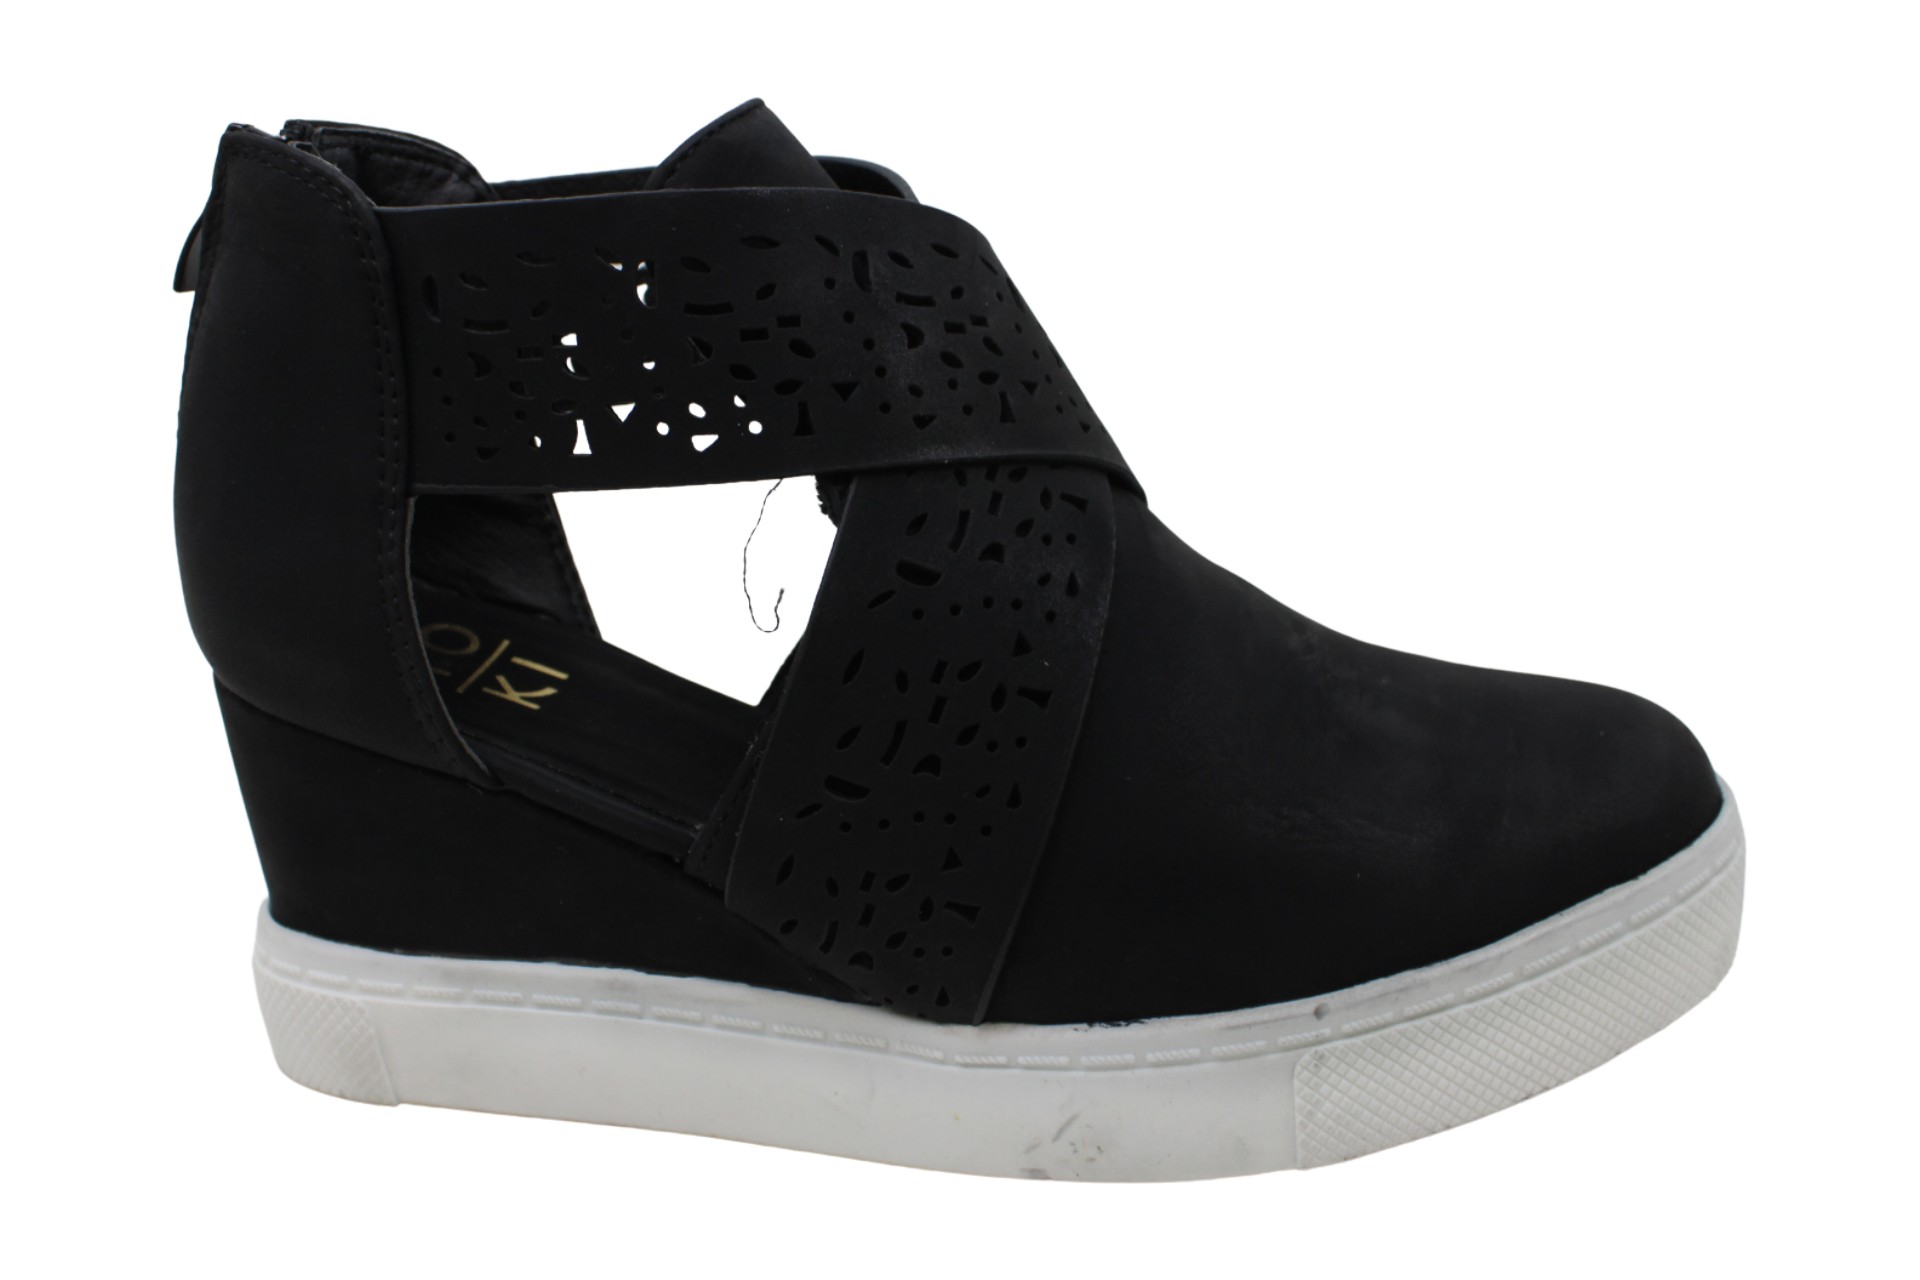 Yoki Womens Heeled Sandals znyne, Black, Size 7.0 | eBay